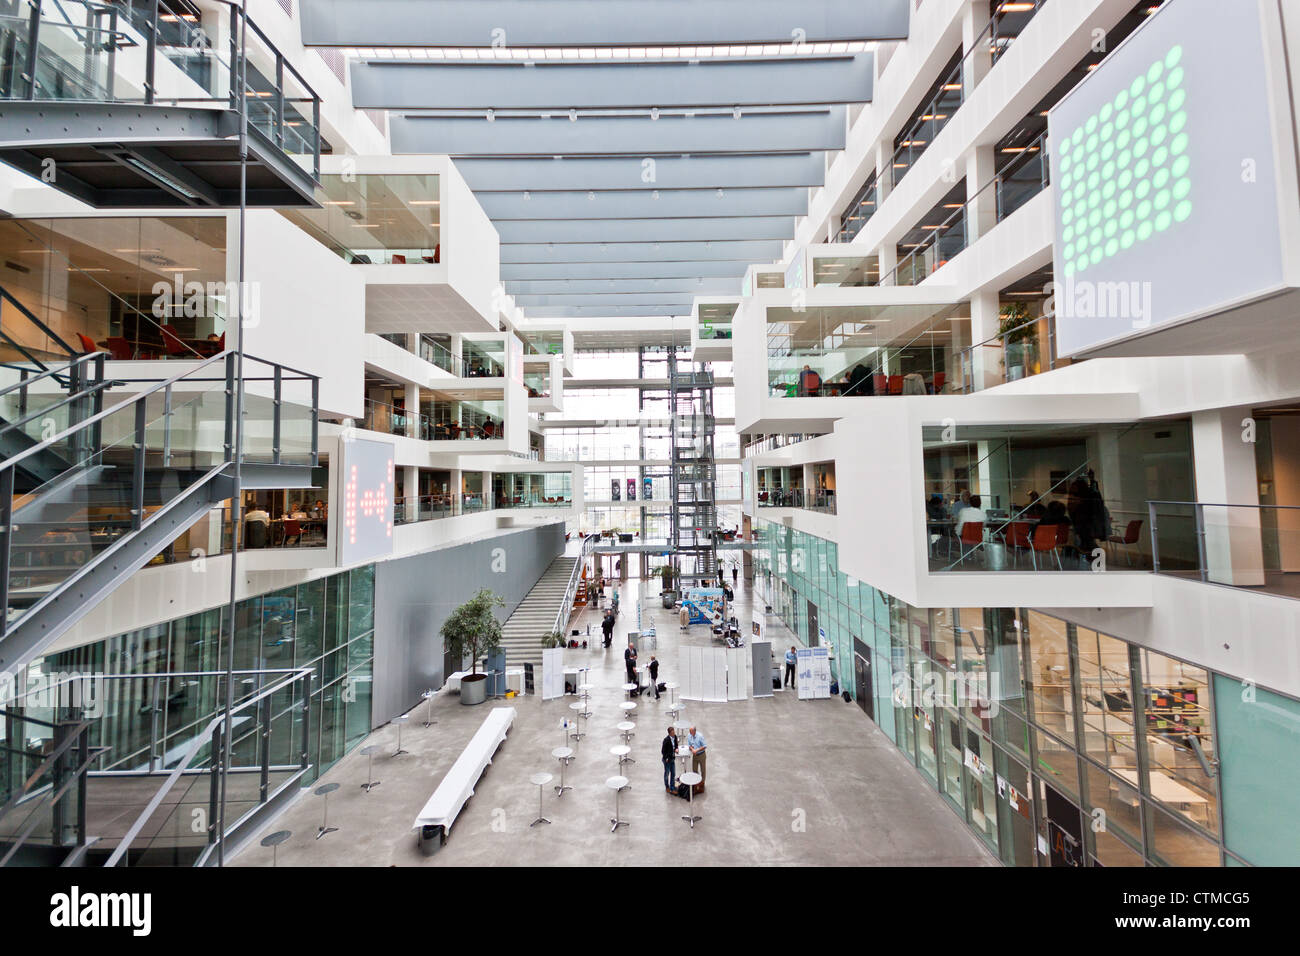 Copenhagen IT University by Henning Larsen Stock Photo - Alamy